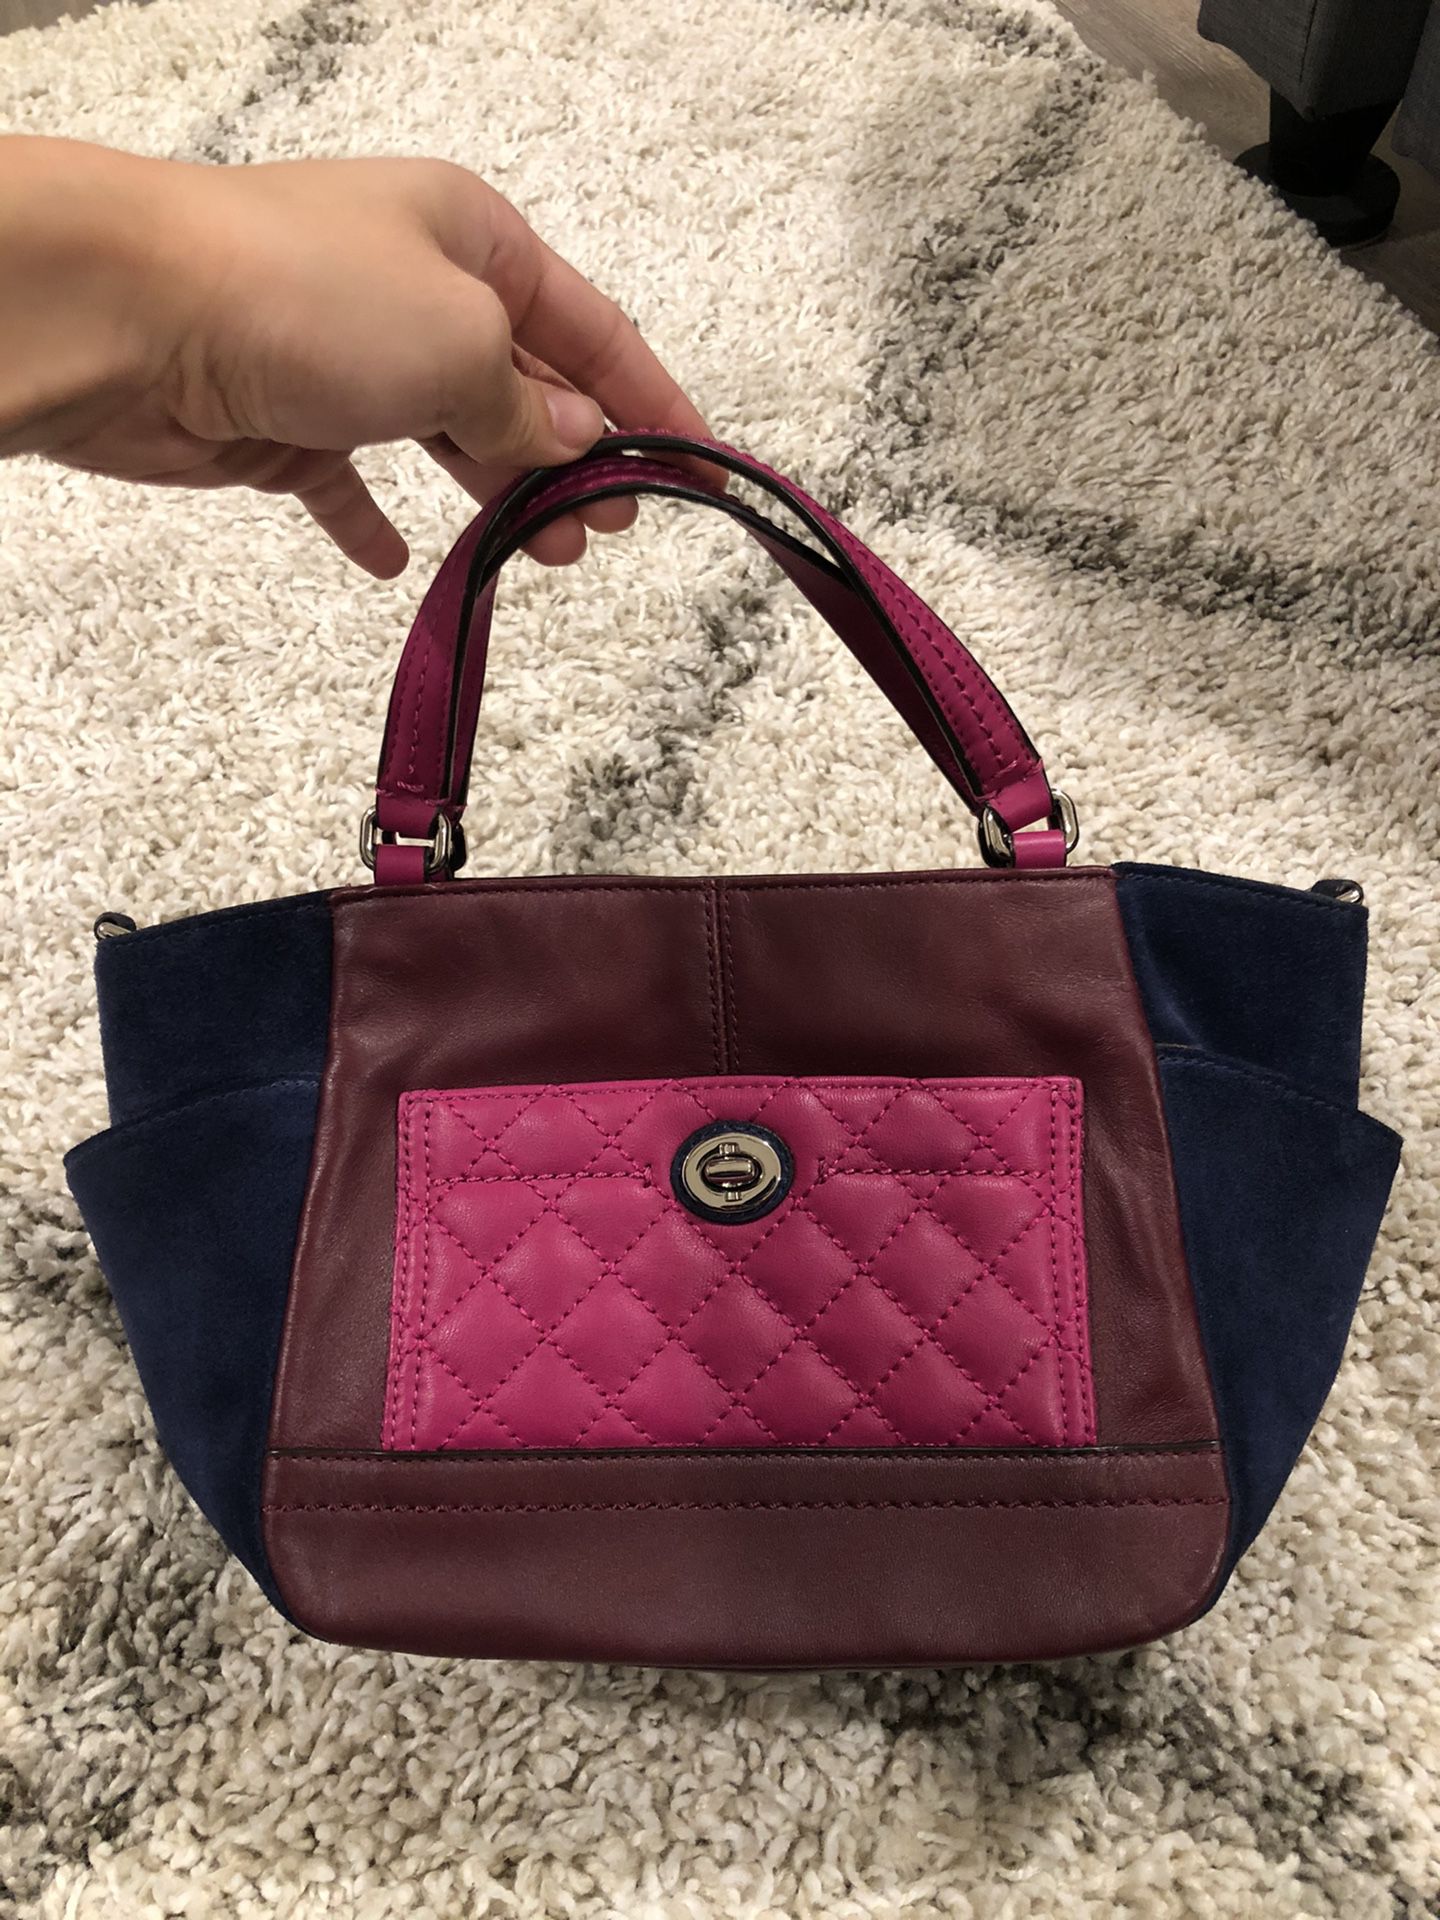 Coach plum navy pink small handbag with strap